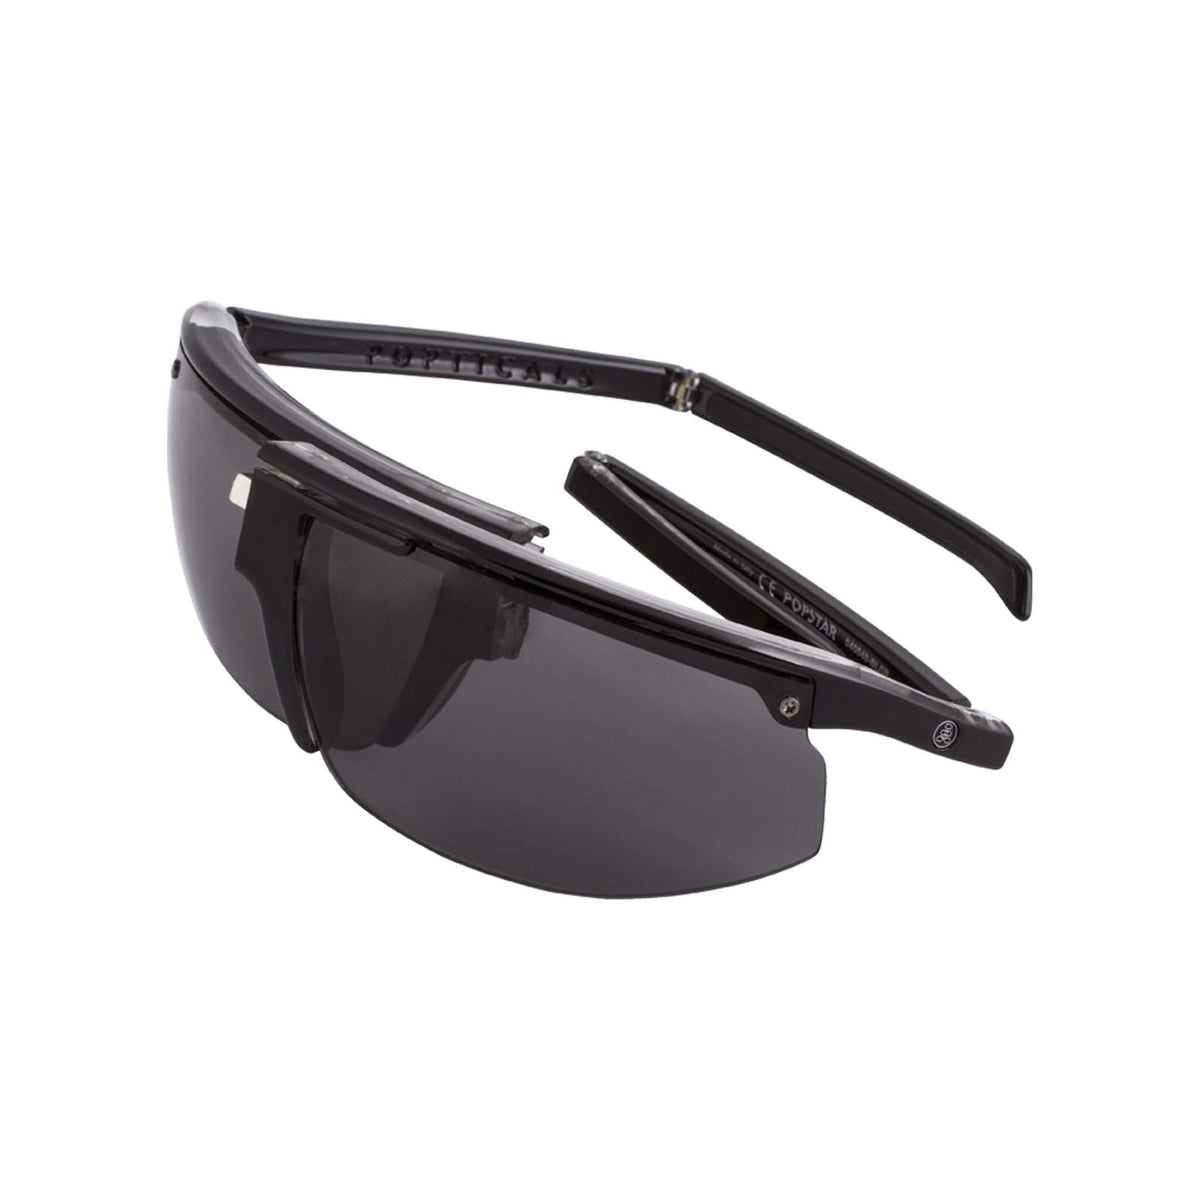 Popticals, Premium Compact Sunglasses, PopStar, 040040-BLGP, Polarized Sunglasses, Gloss Black Crystal Frame, Gray Lenses, Spider View